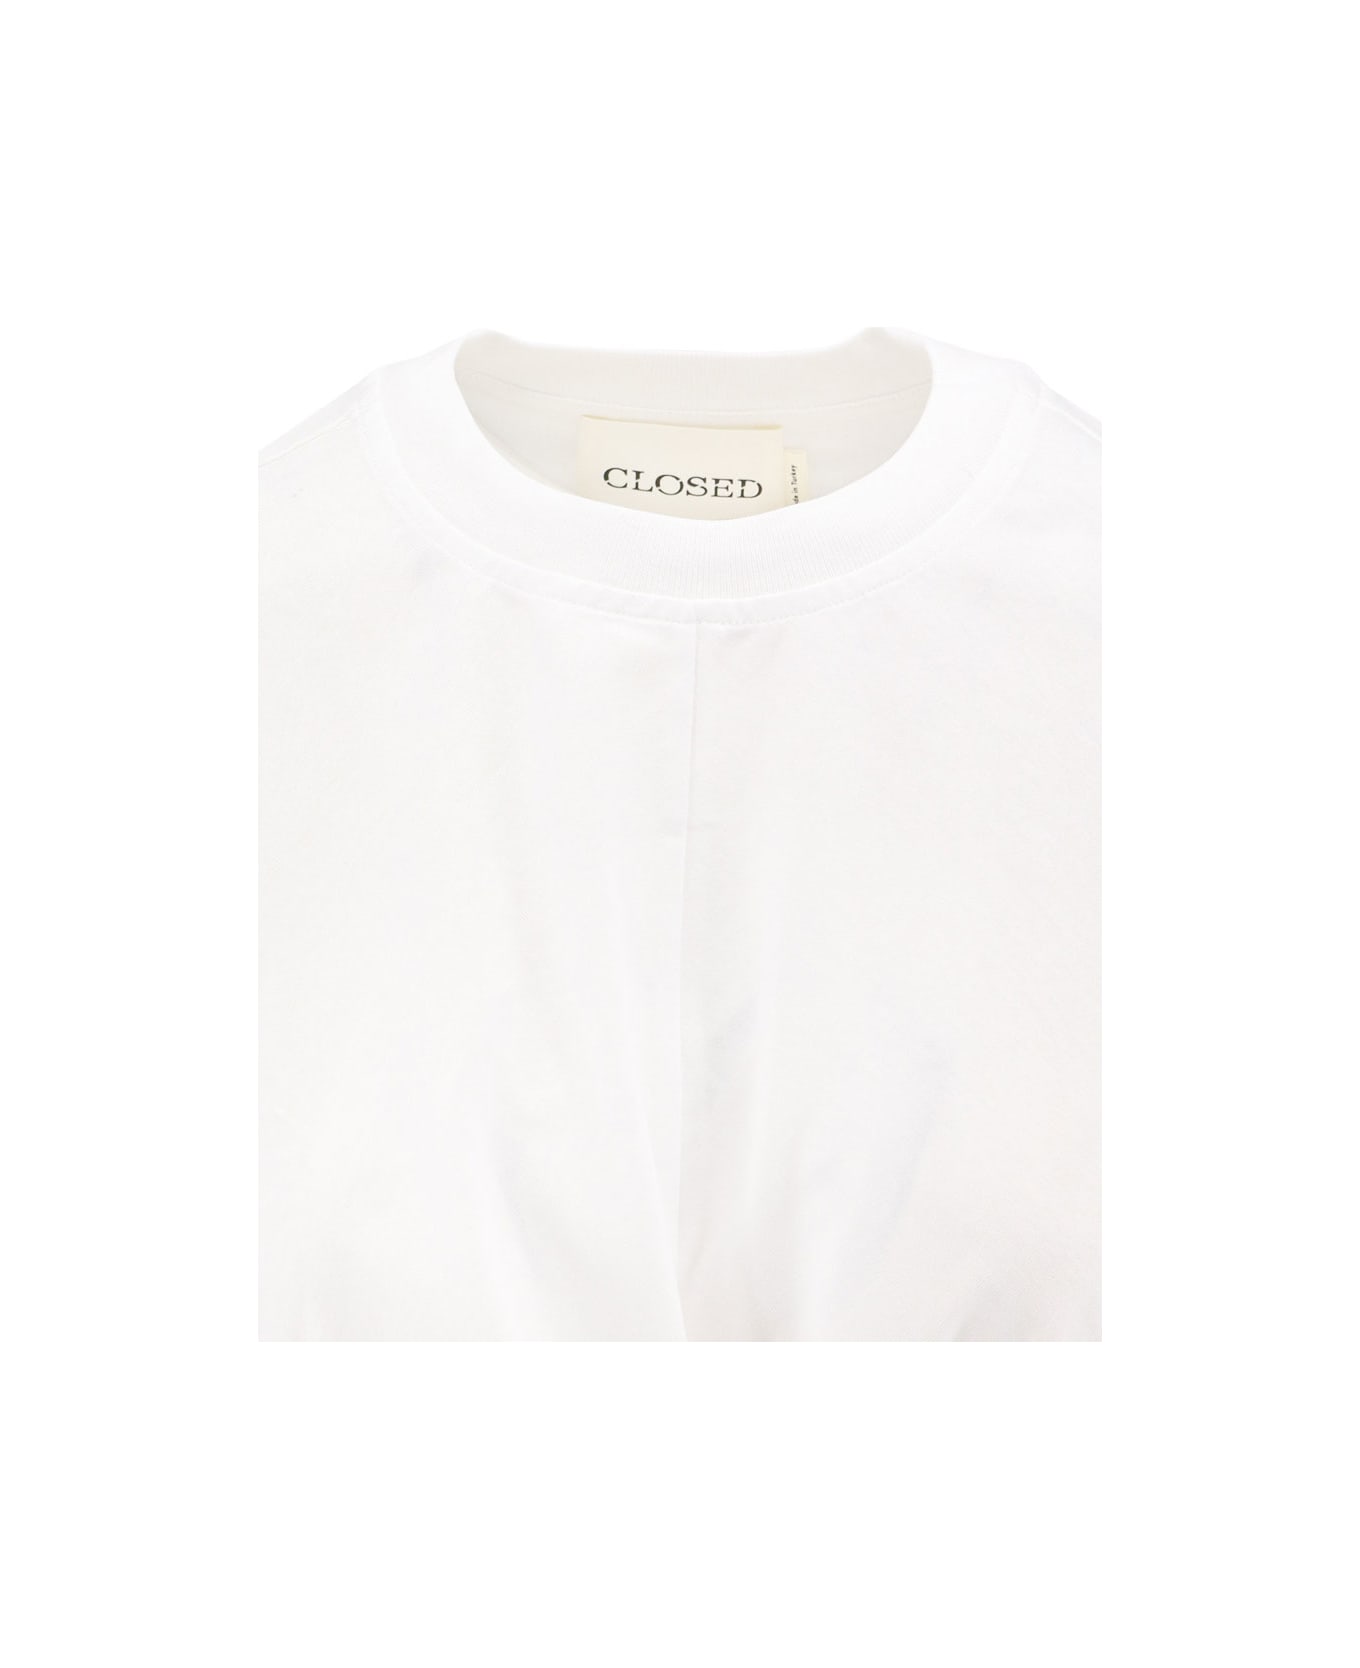 Closed T-shirt - White